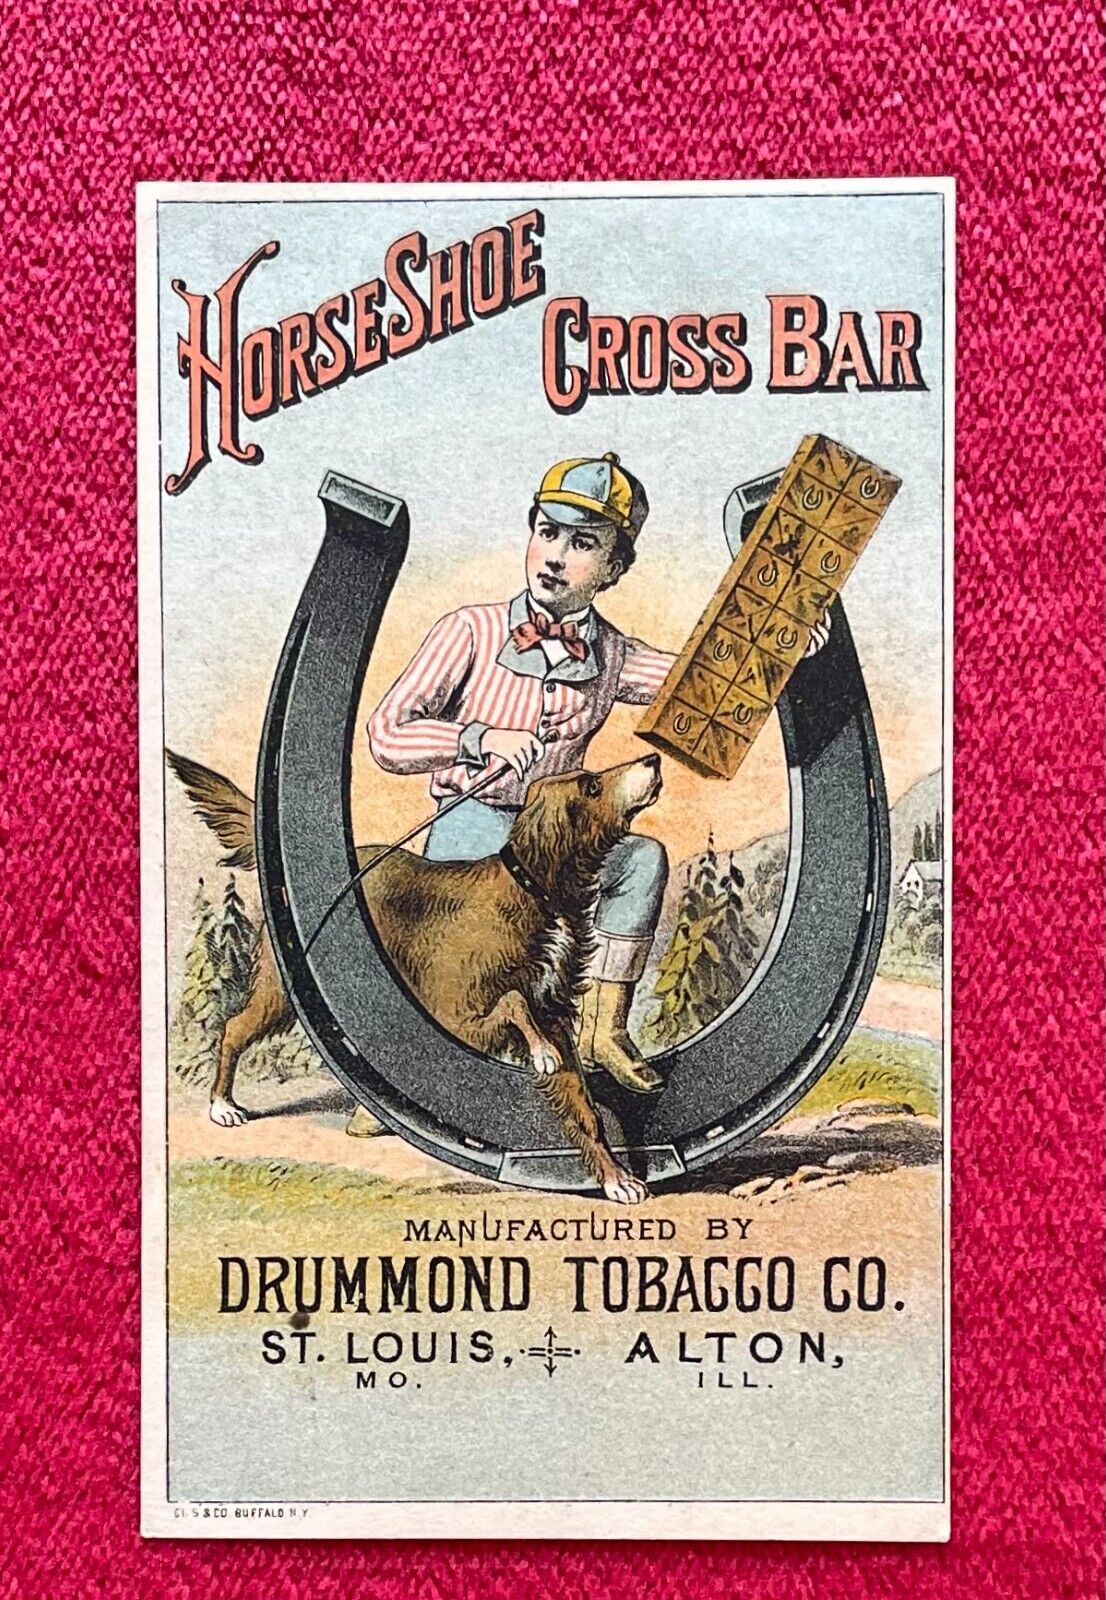 DRUMMOND TOBACCO CO. - HORSESHOE CROSS BAR PLUG - 1880s VICTORIAN TRADE CARD